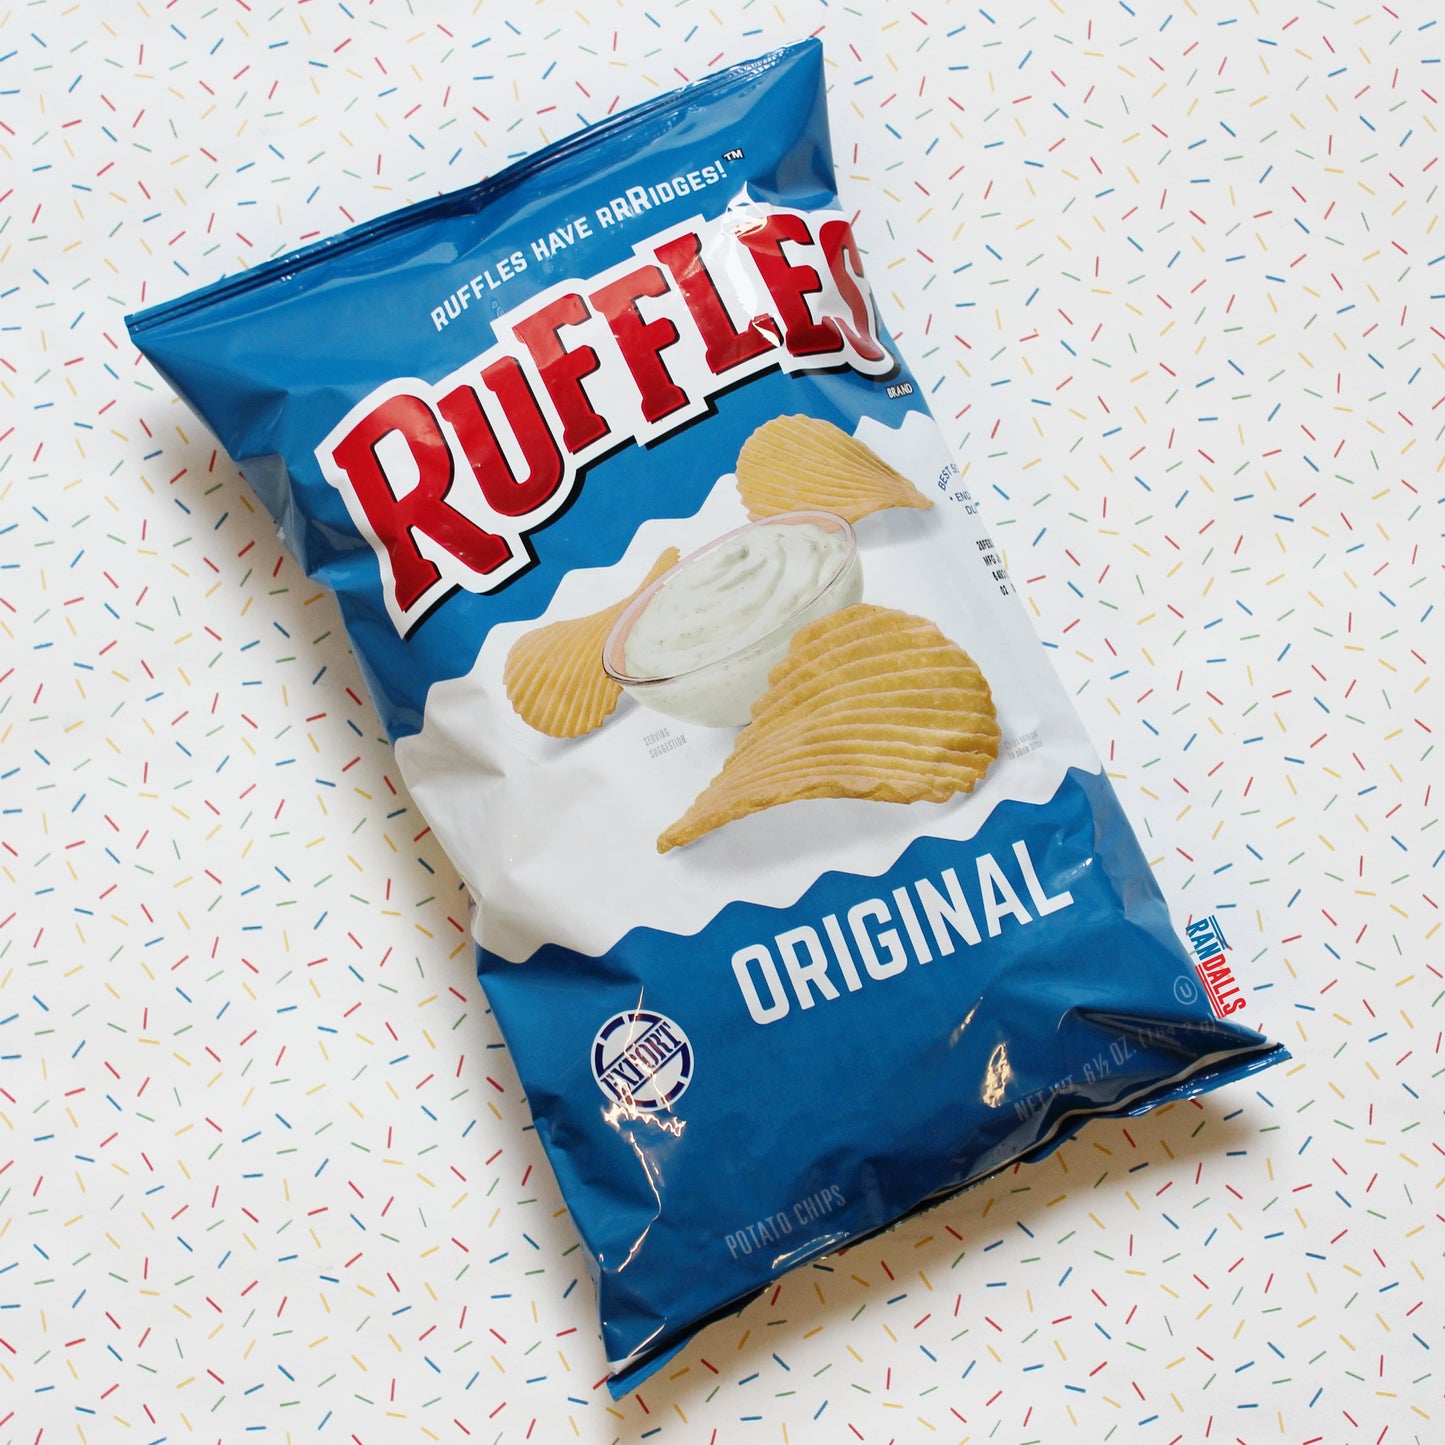 ruffles original large, ridged crisps, potato chips, salted, usa, randalls